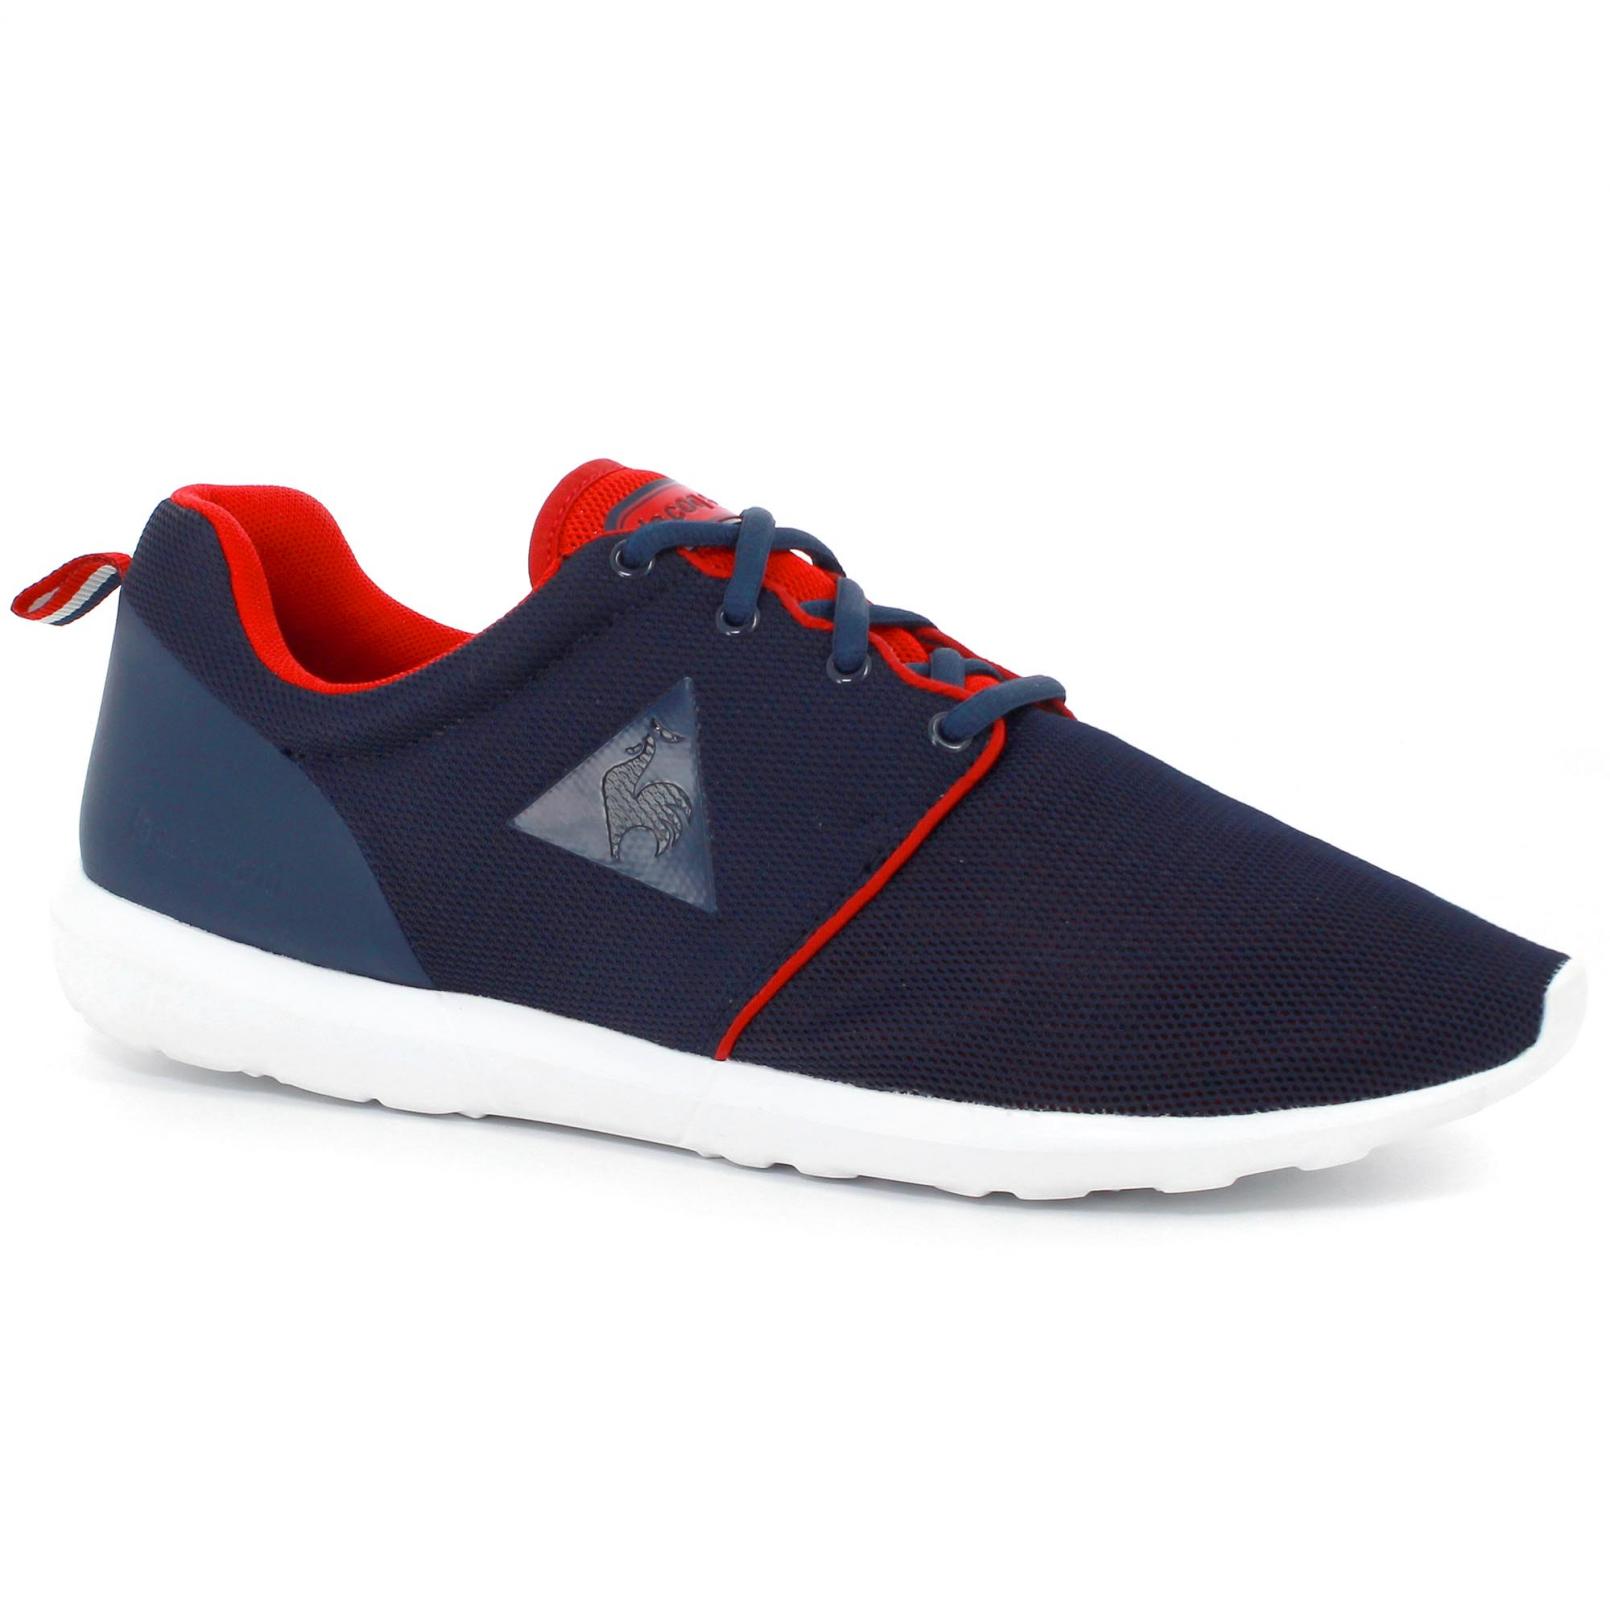 Shoes – Le Coq Sportif Dynacomf Mesh Blue/Red